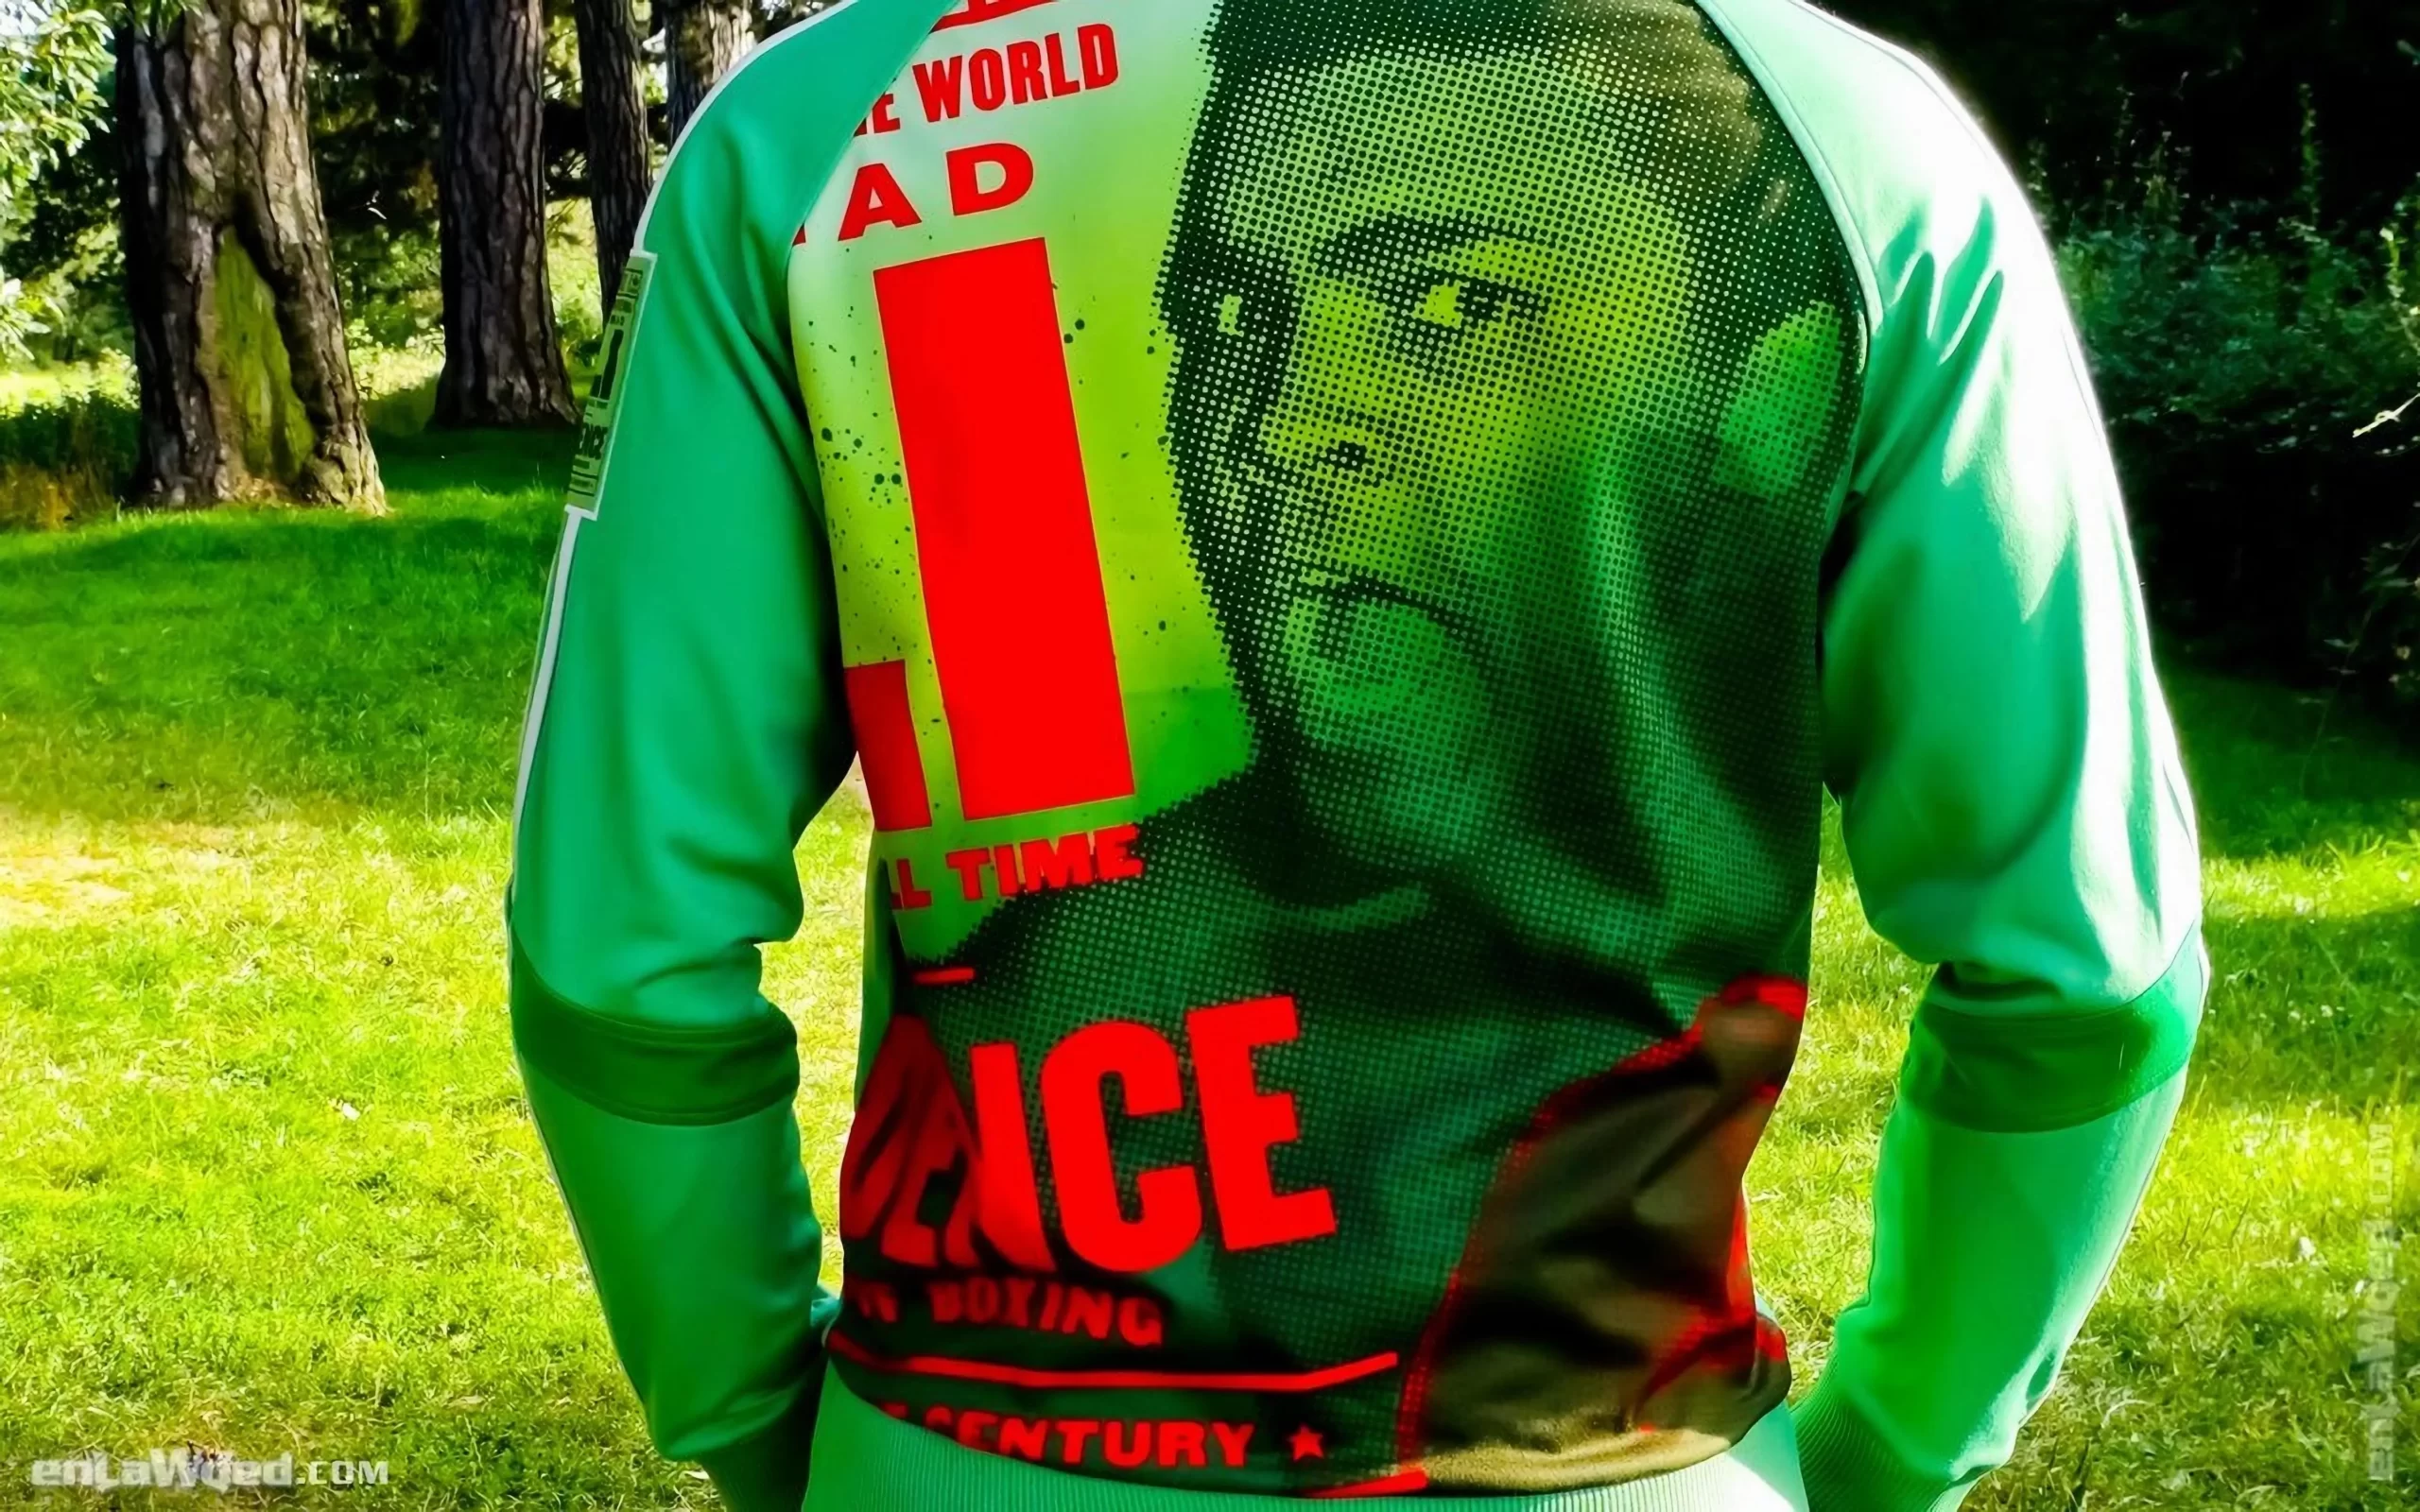 Men’s 2007 Muhammad Ali Confidence TT by Adidas: Launching (EnLawded.com file #lmc4re07377mxfht4k6)